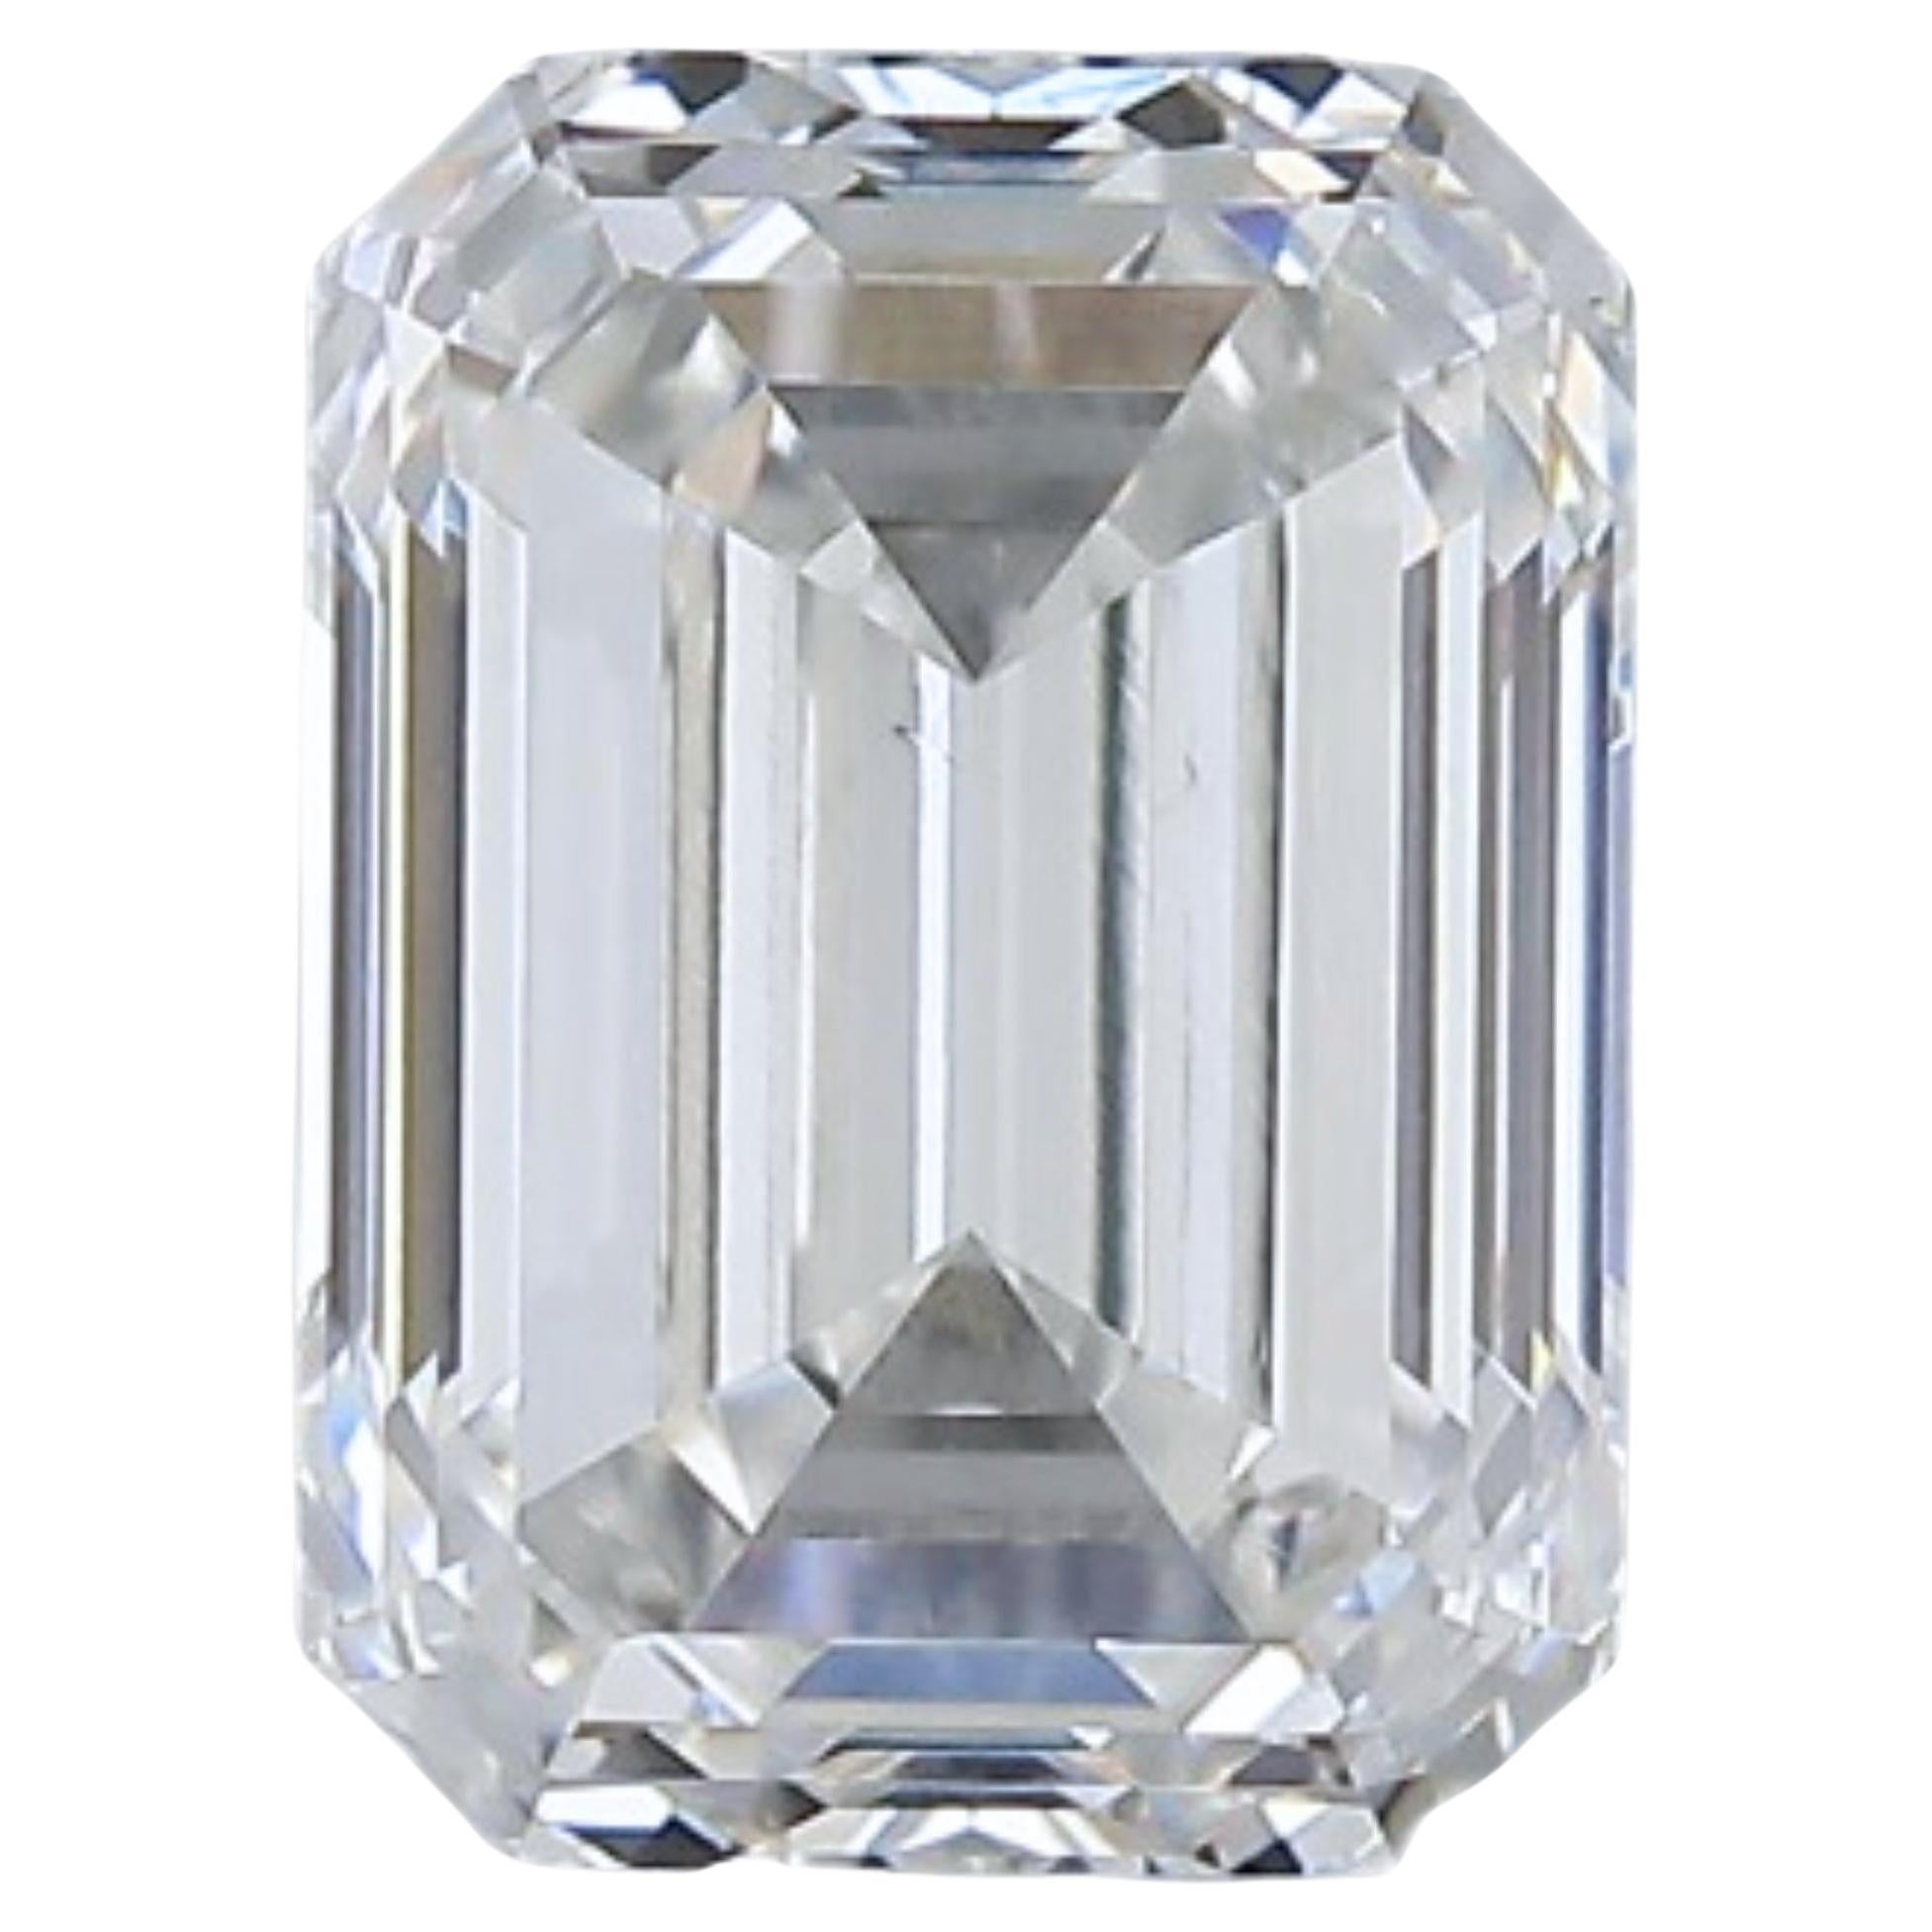 1pc Stunning Natural cut Emerald diamond in a 1.03 carat